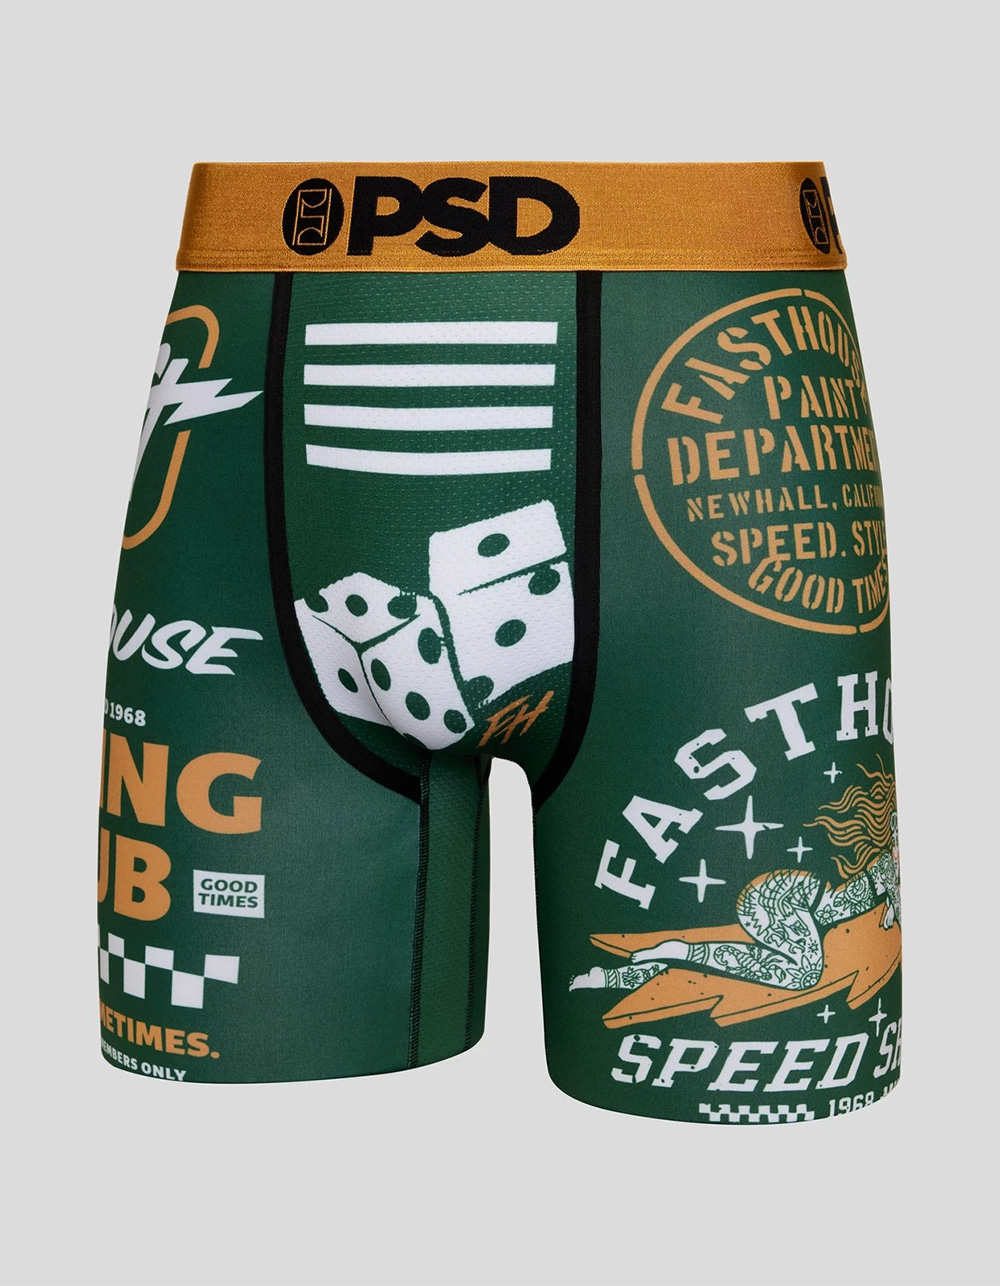 PSD Men's Monogram Luxe 3-Pack Boxer Briefs, Multi, S at